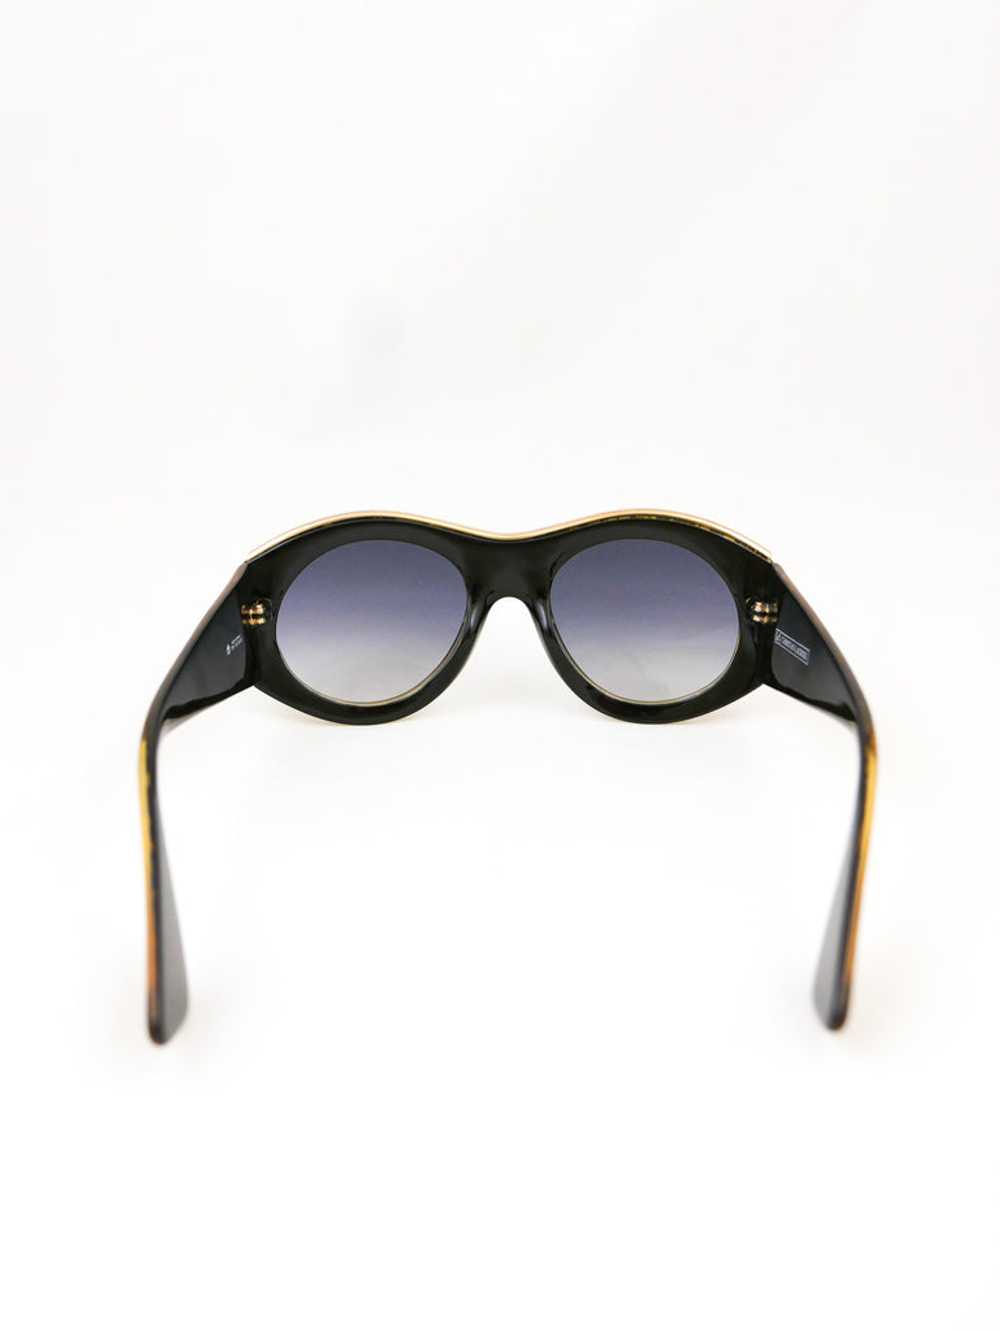 Christian Lacroix Sunglasses - image 6